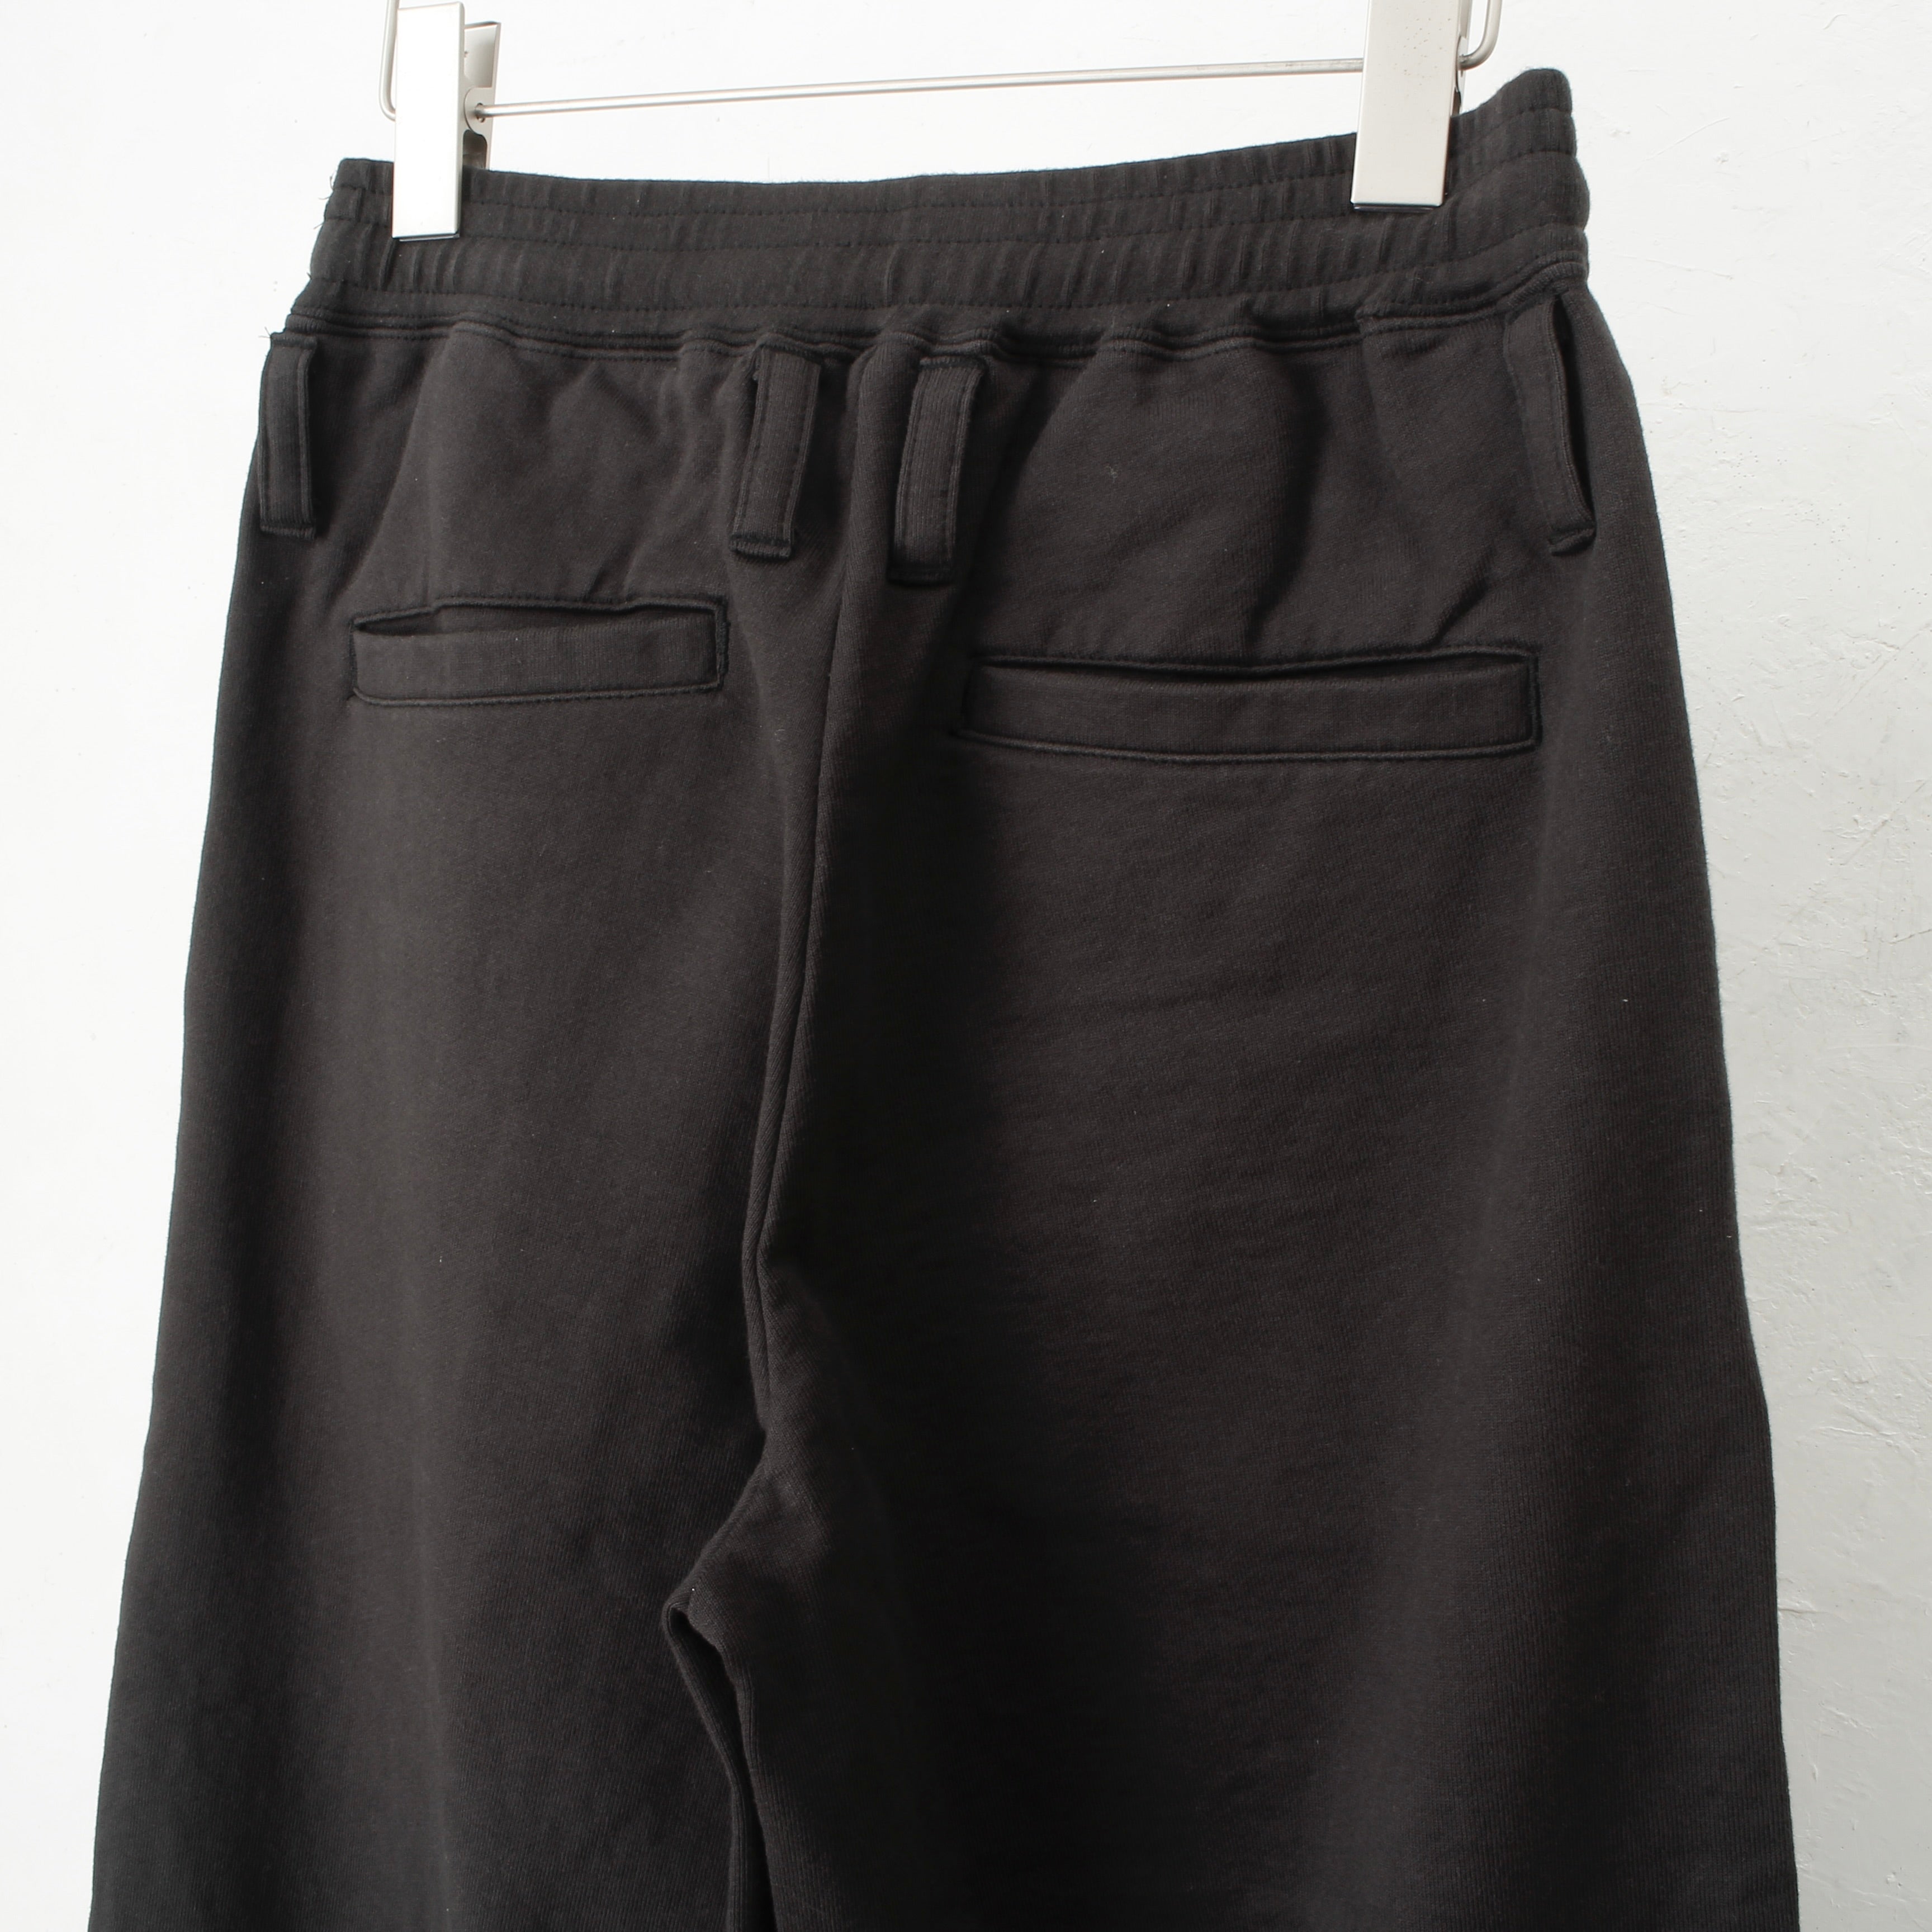 Washed Black Oversized Sweatpants x Streetwear Baggy Pants